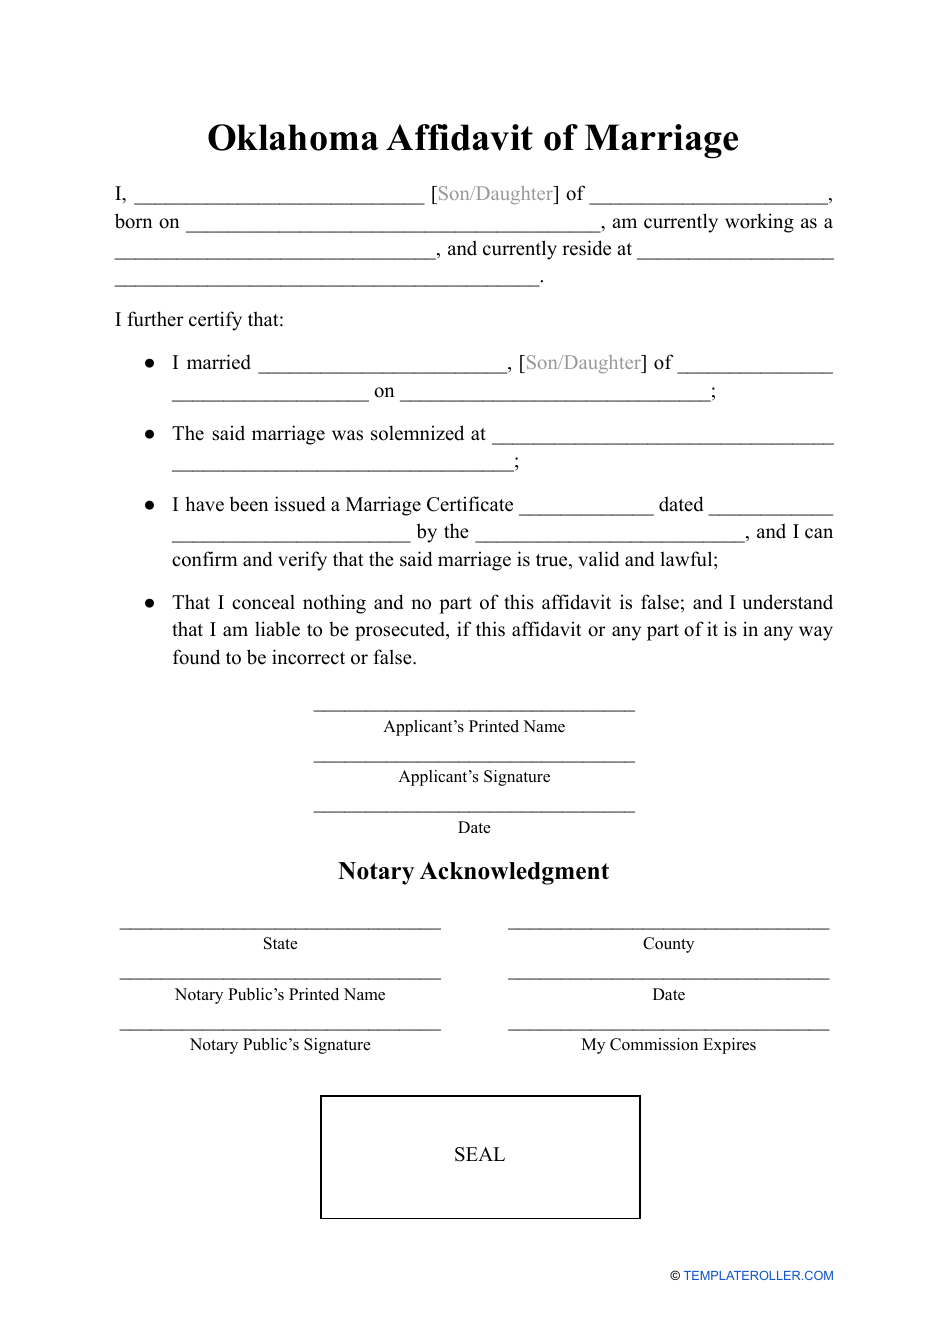 Affidavit of Marriage - Oklahoma, Page 1